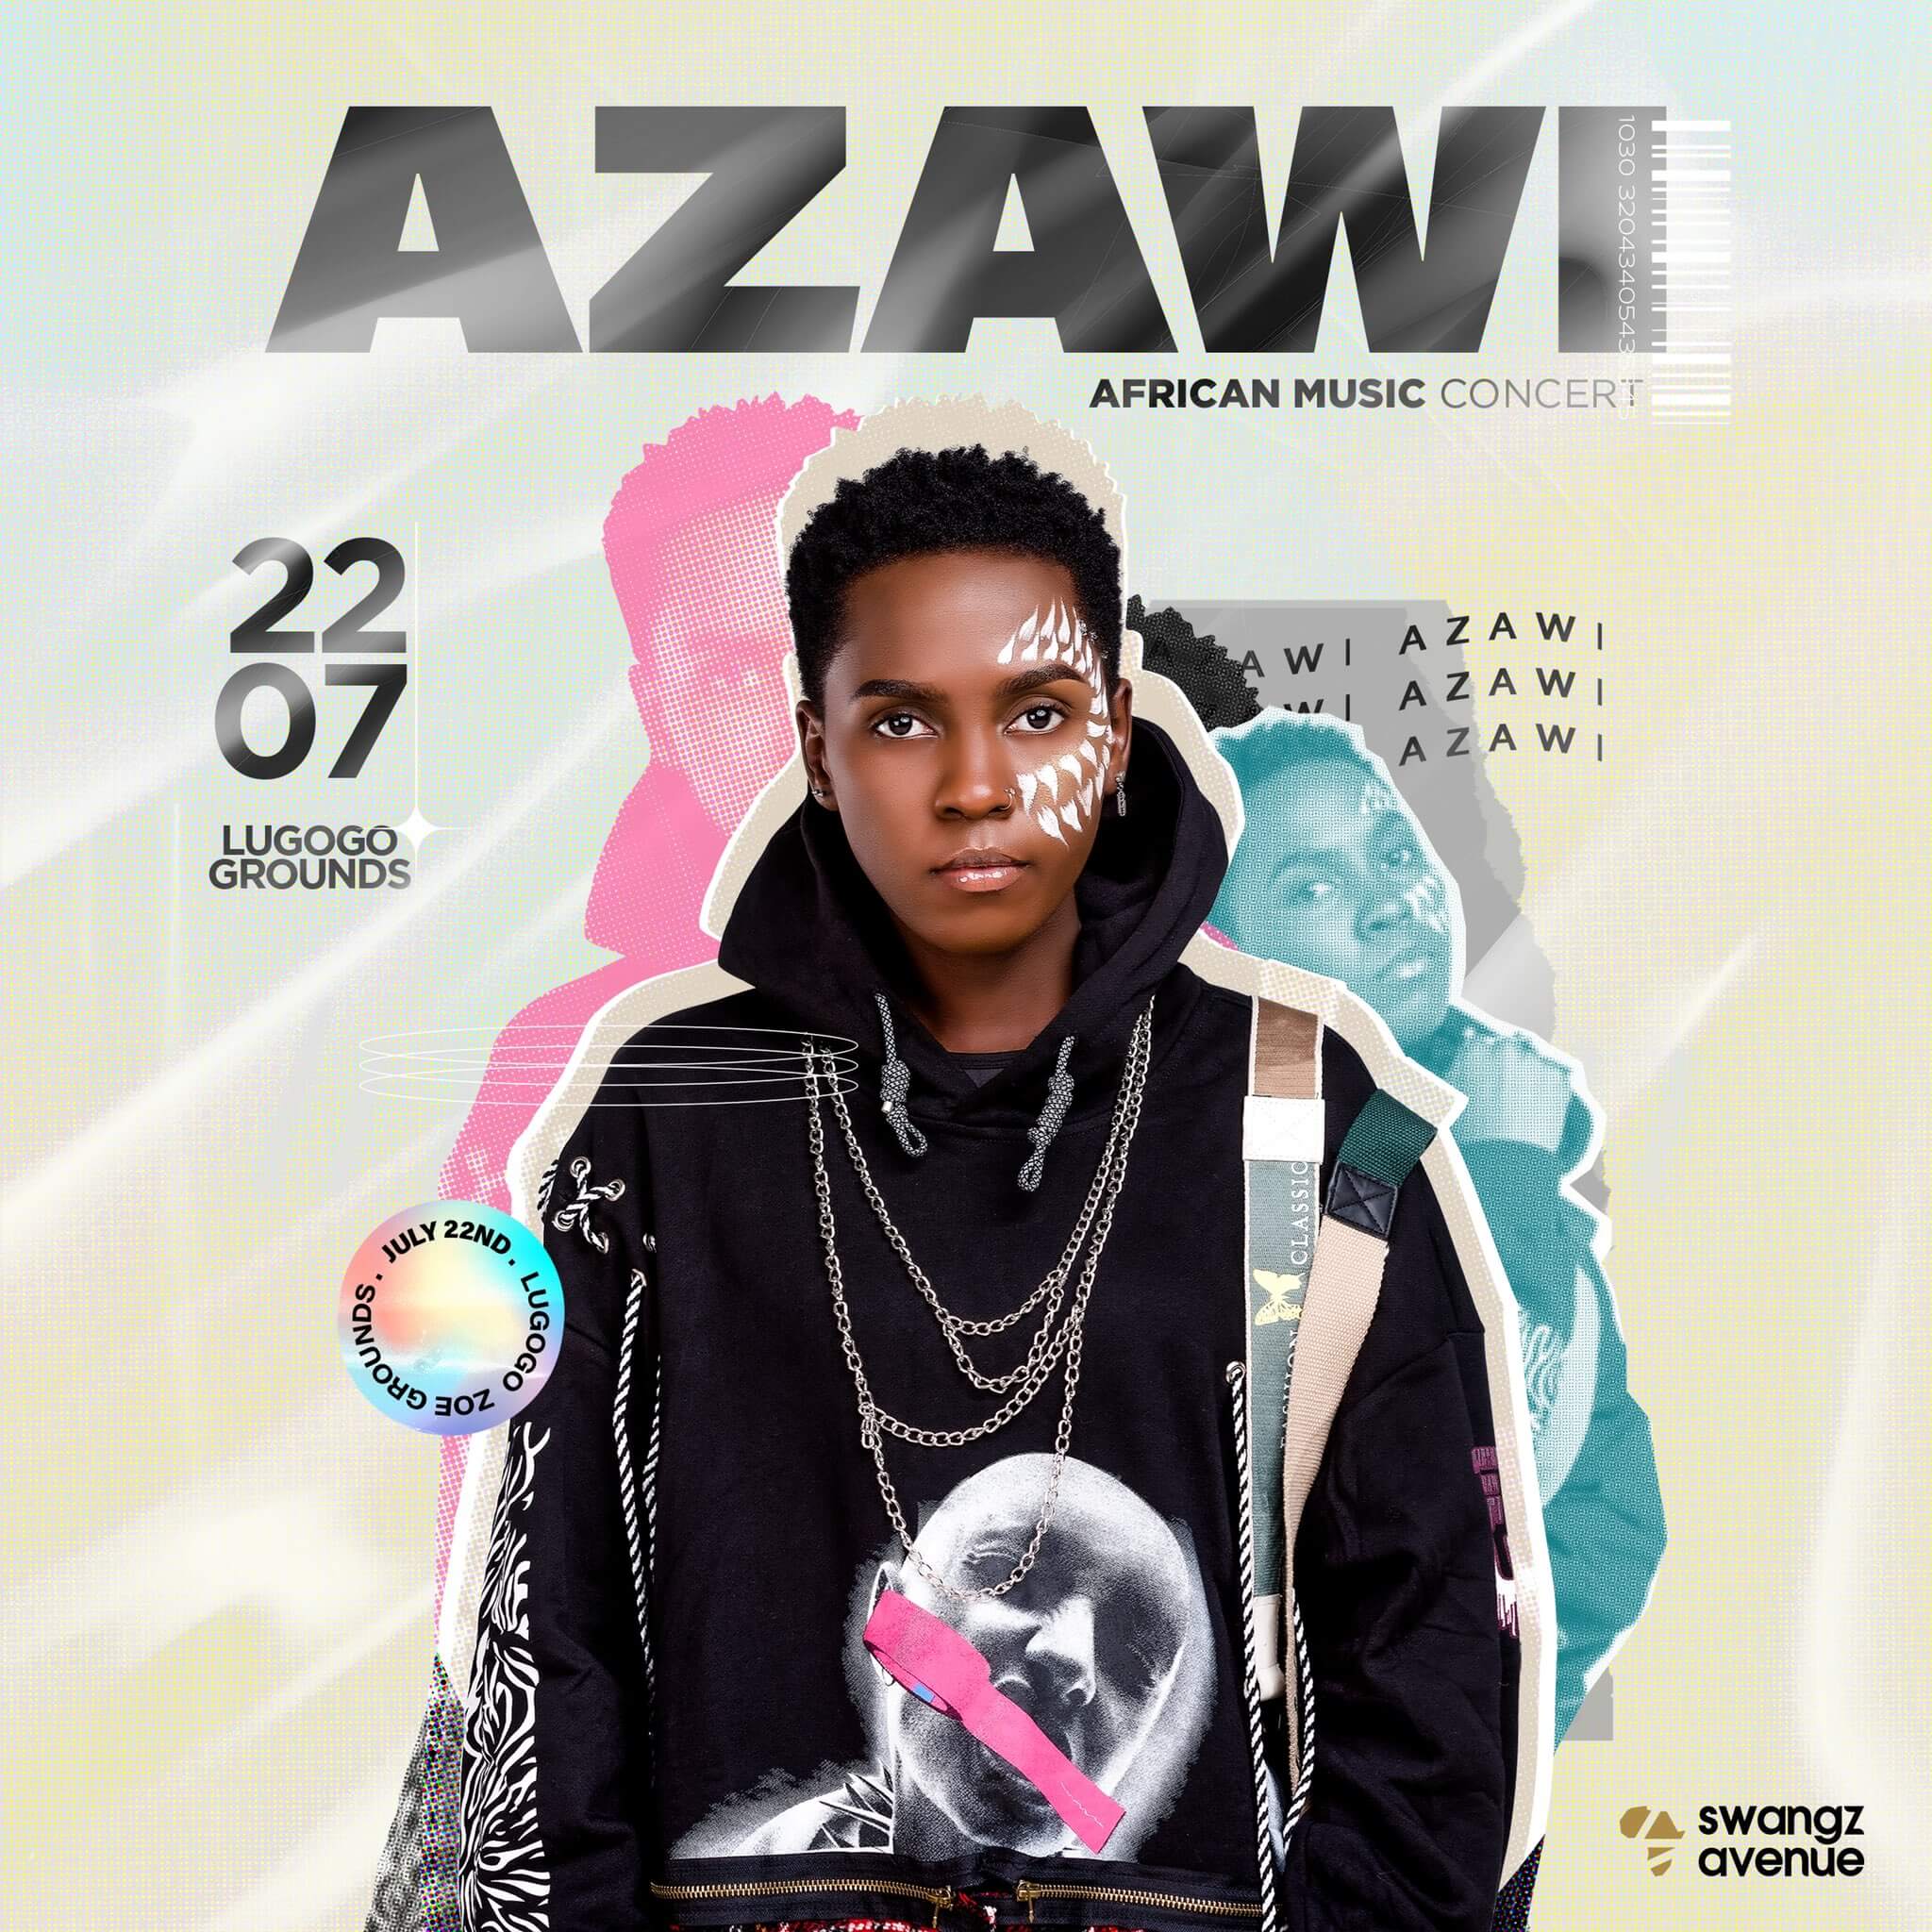 nowthendigital.com__Azawi African Music Concert (1)